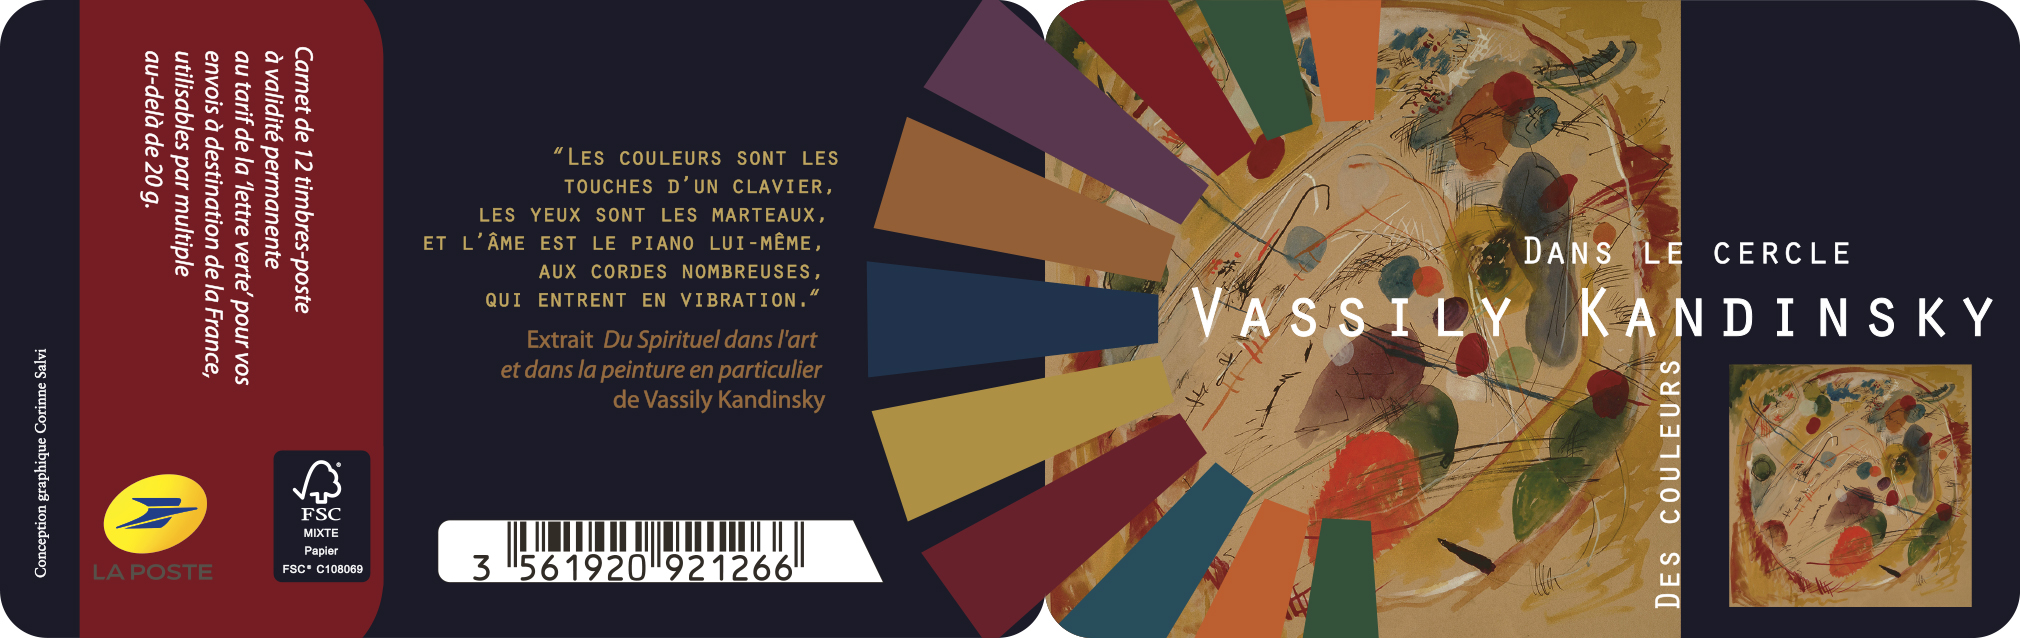 Vassily Kandinsky -  Dans le cercle